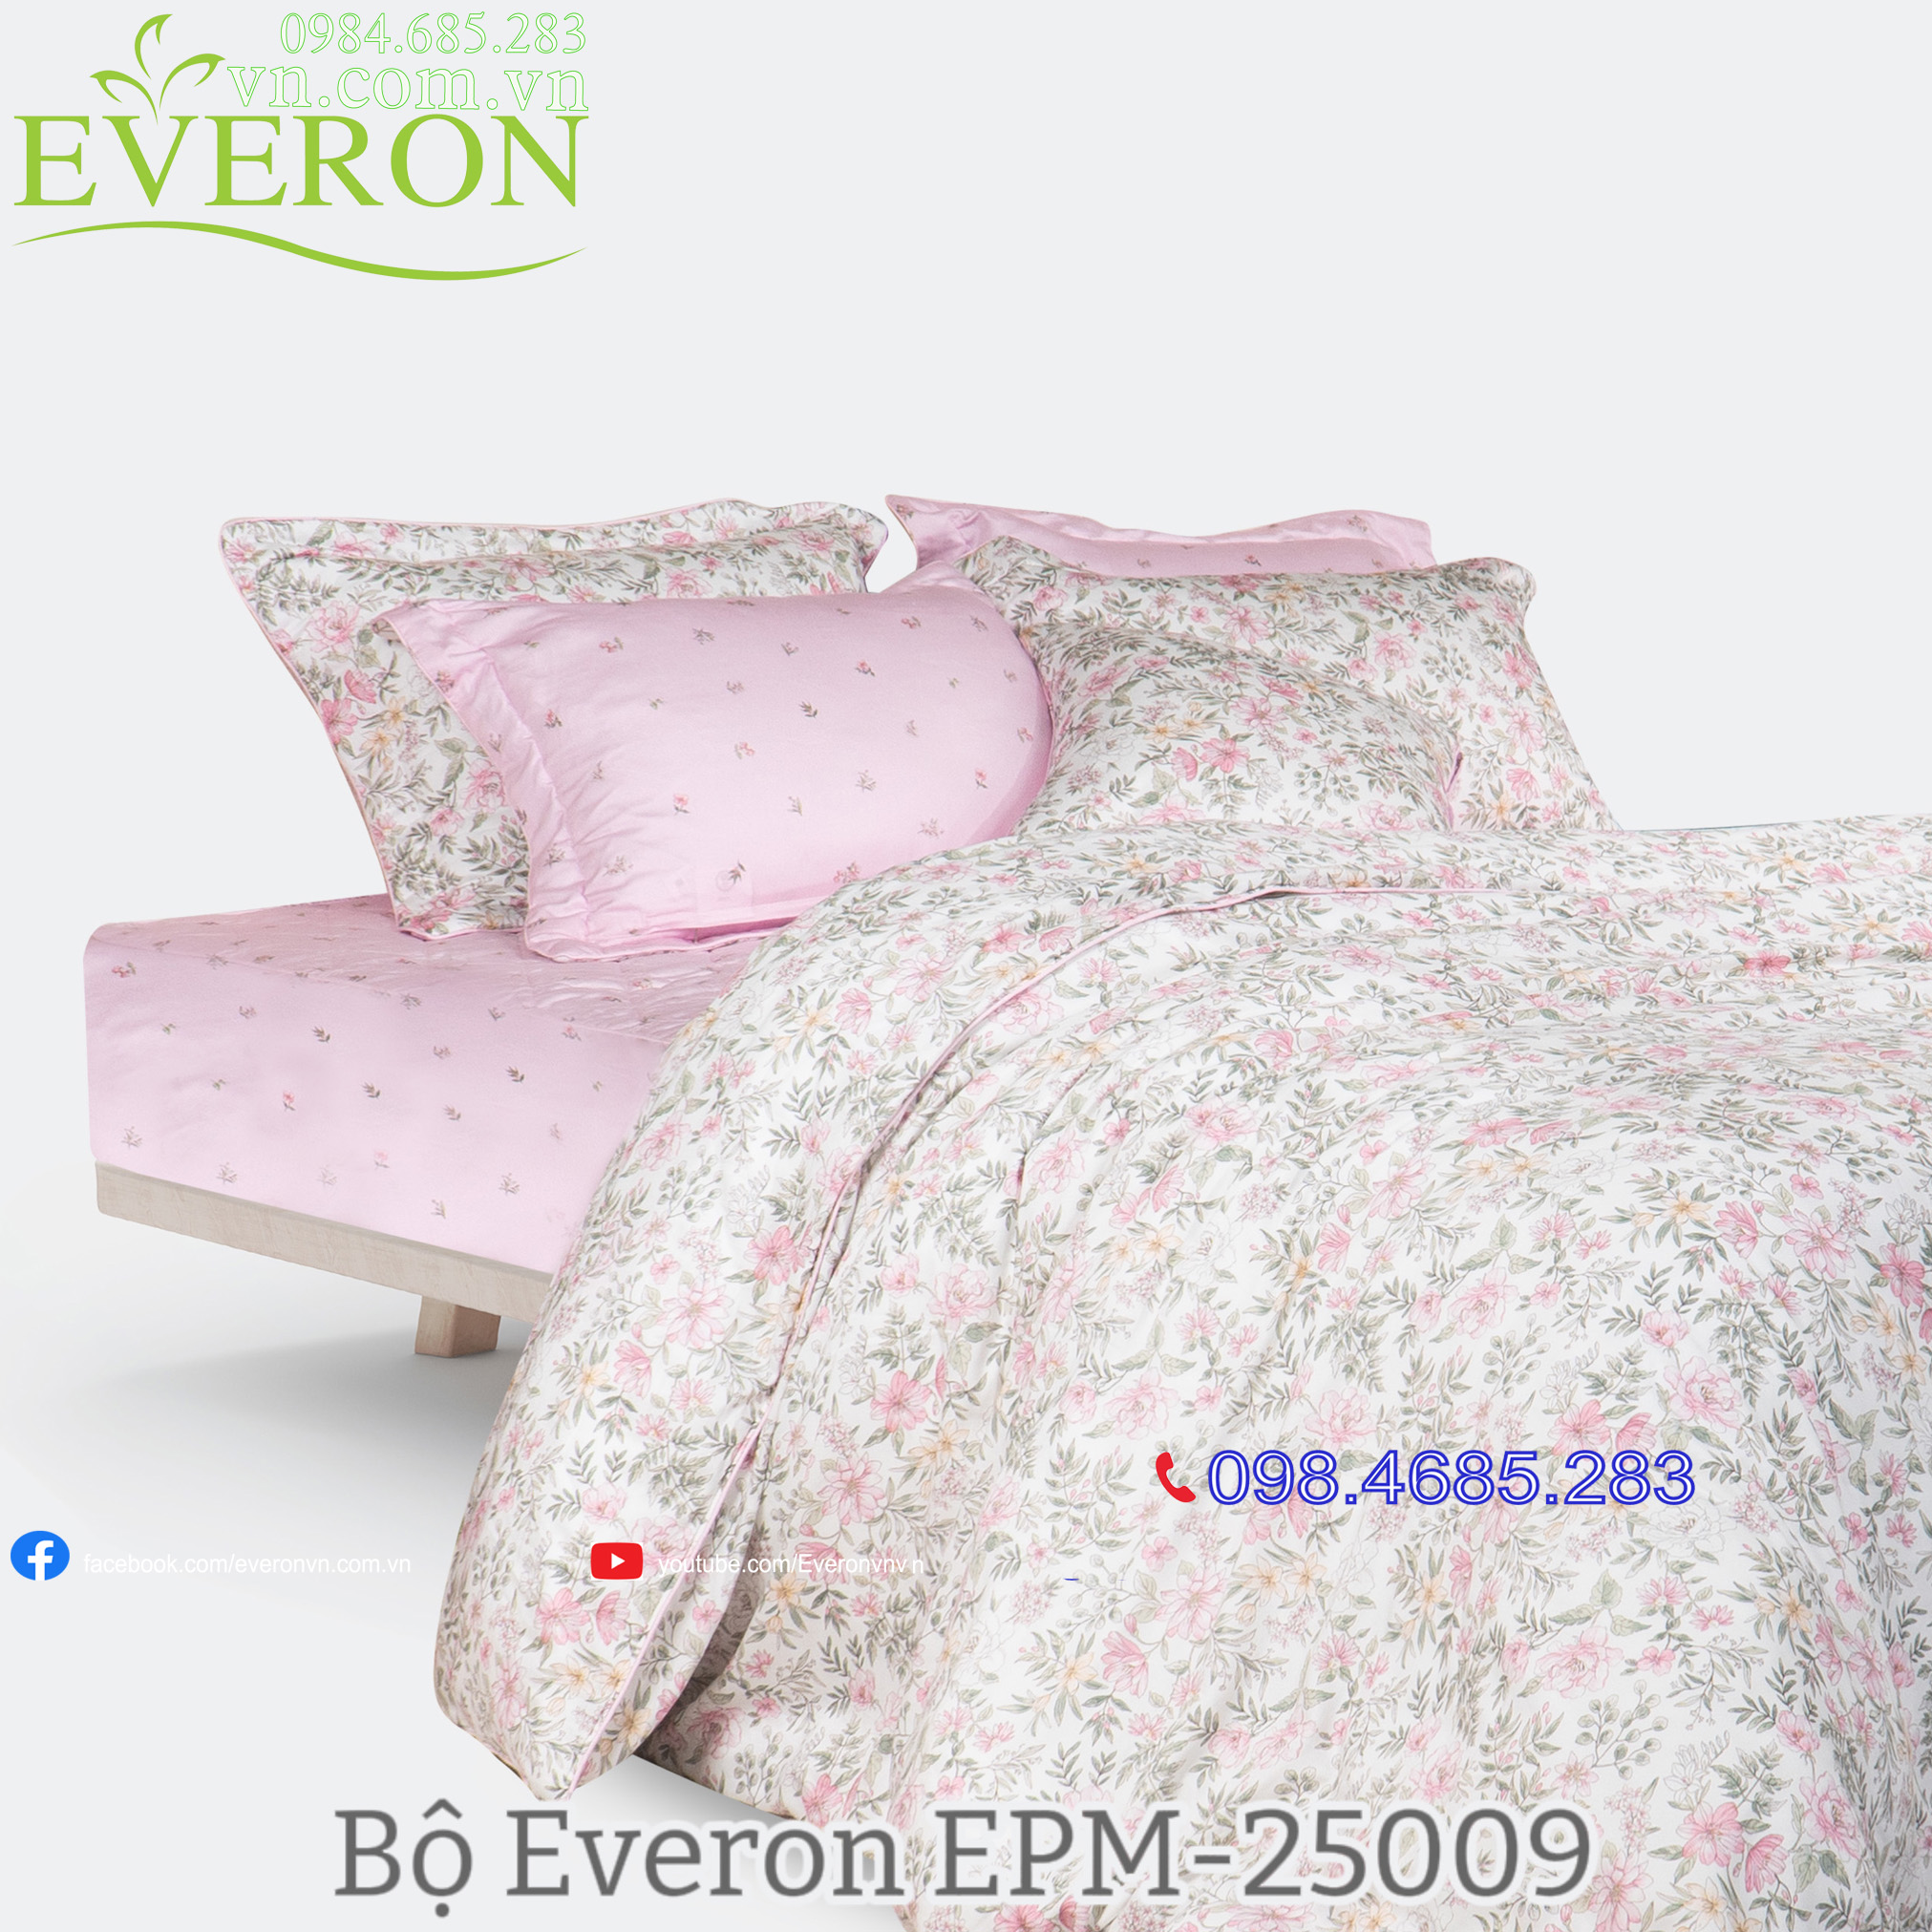 Bộ Everon Epm-25009